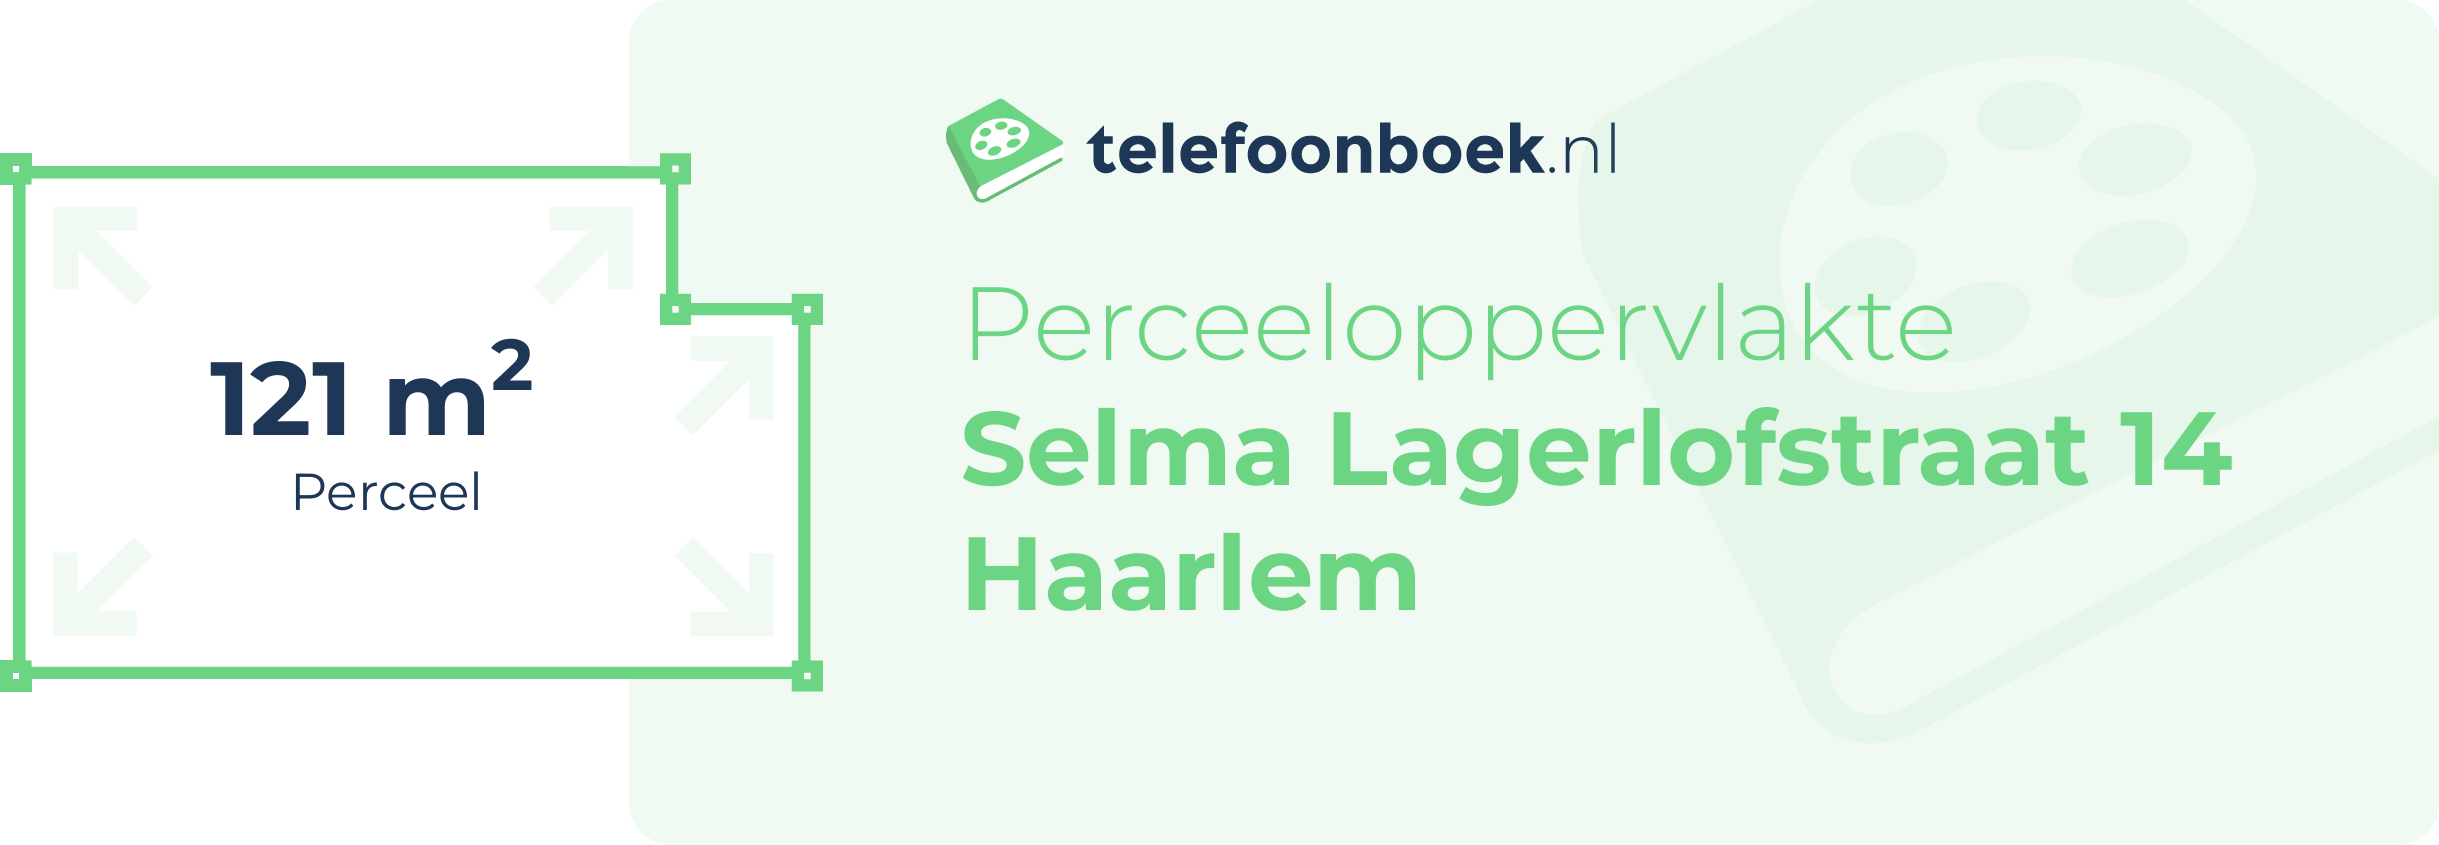 Perceeloppervlakte Selma Lagerlofstraat 14 Haarlem